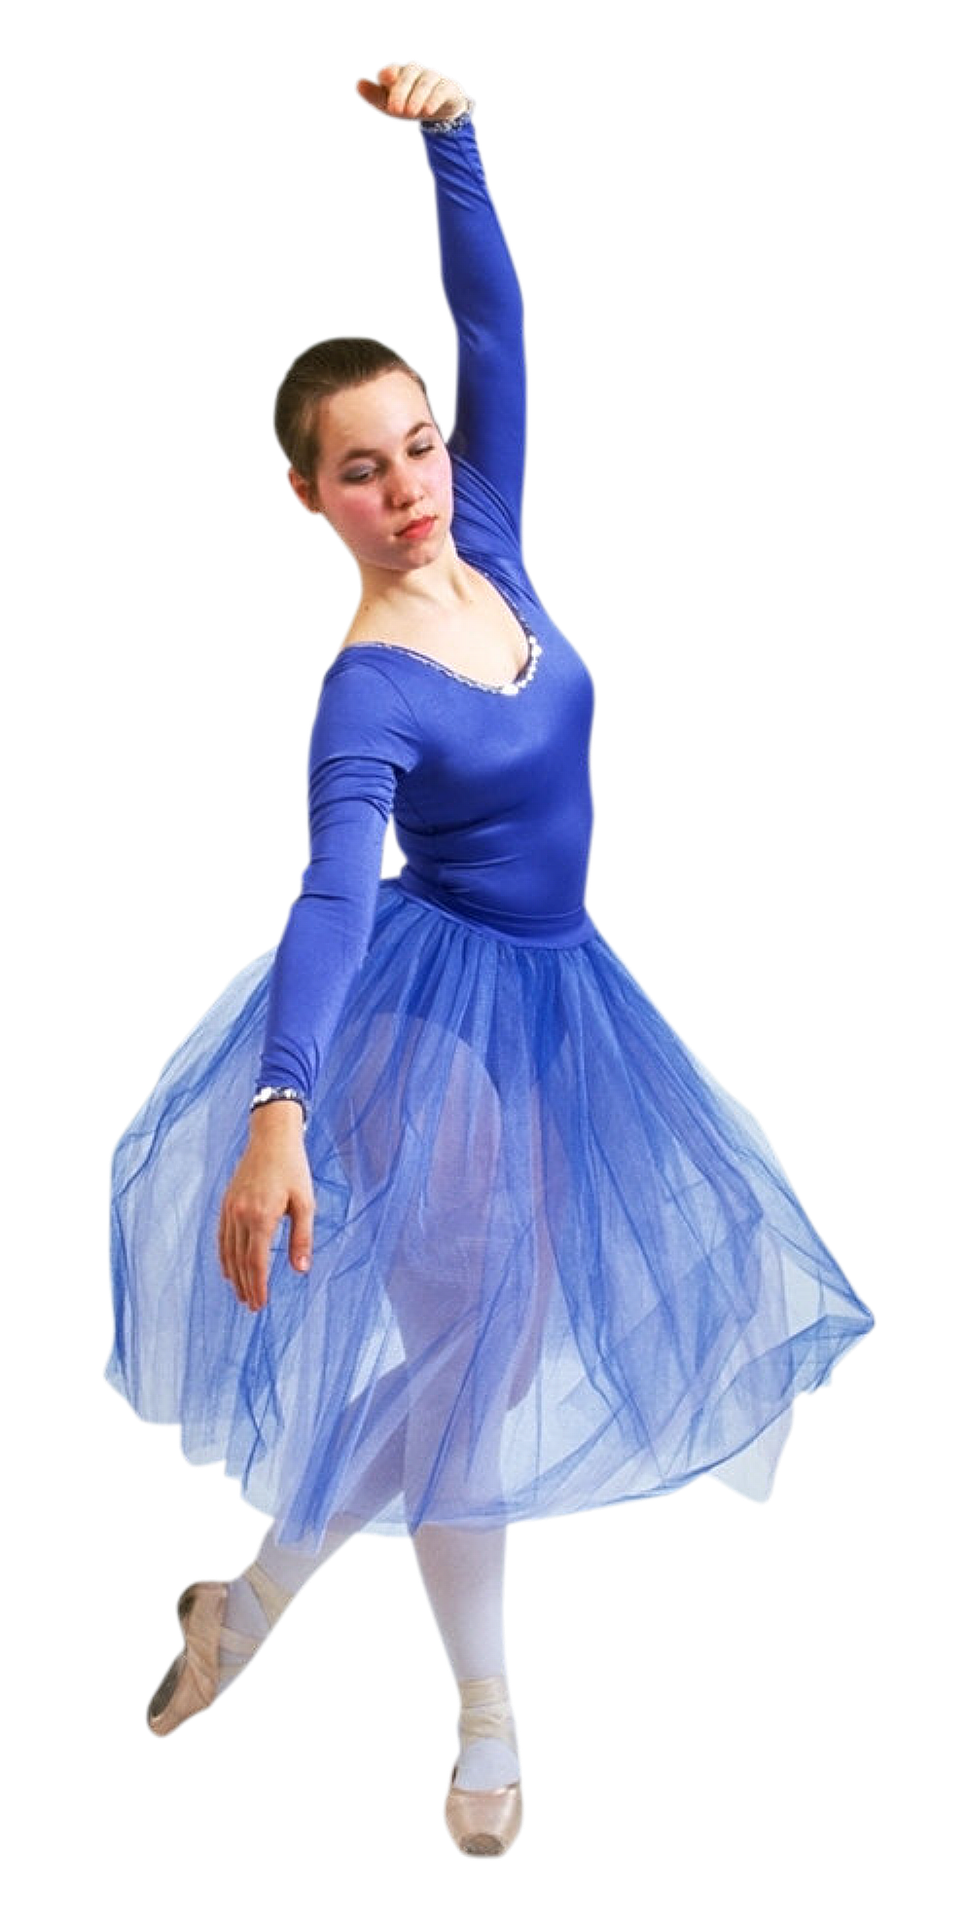 A Woman In A Blue Dress